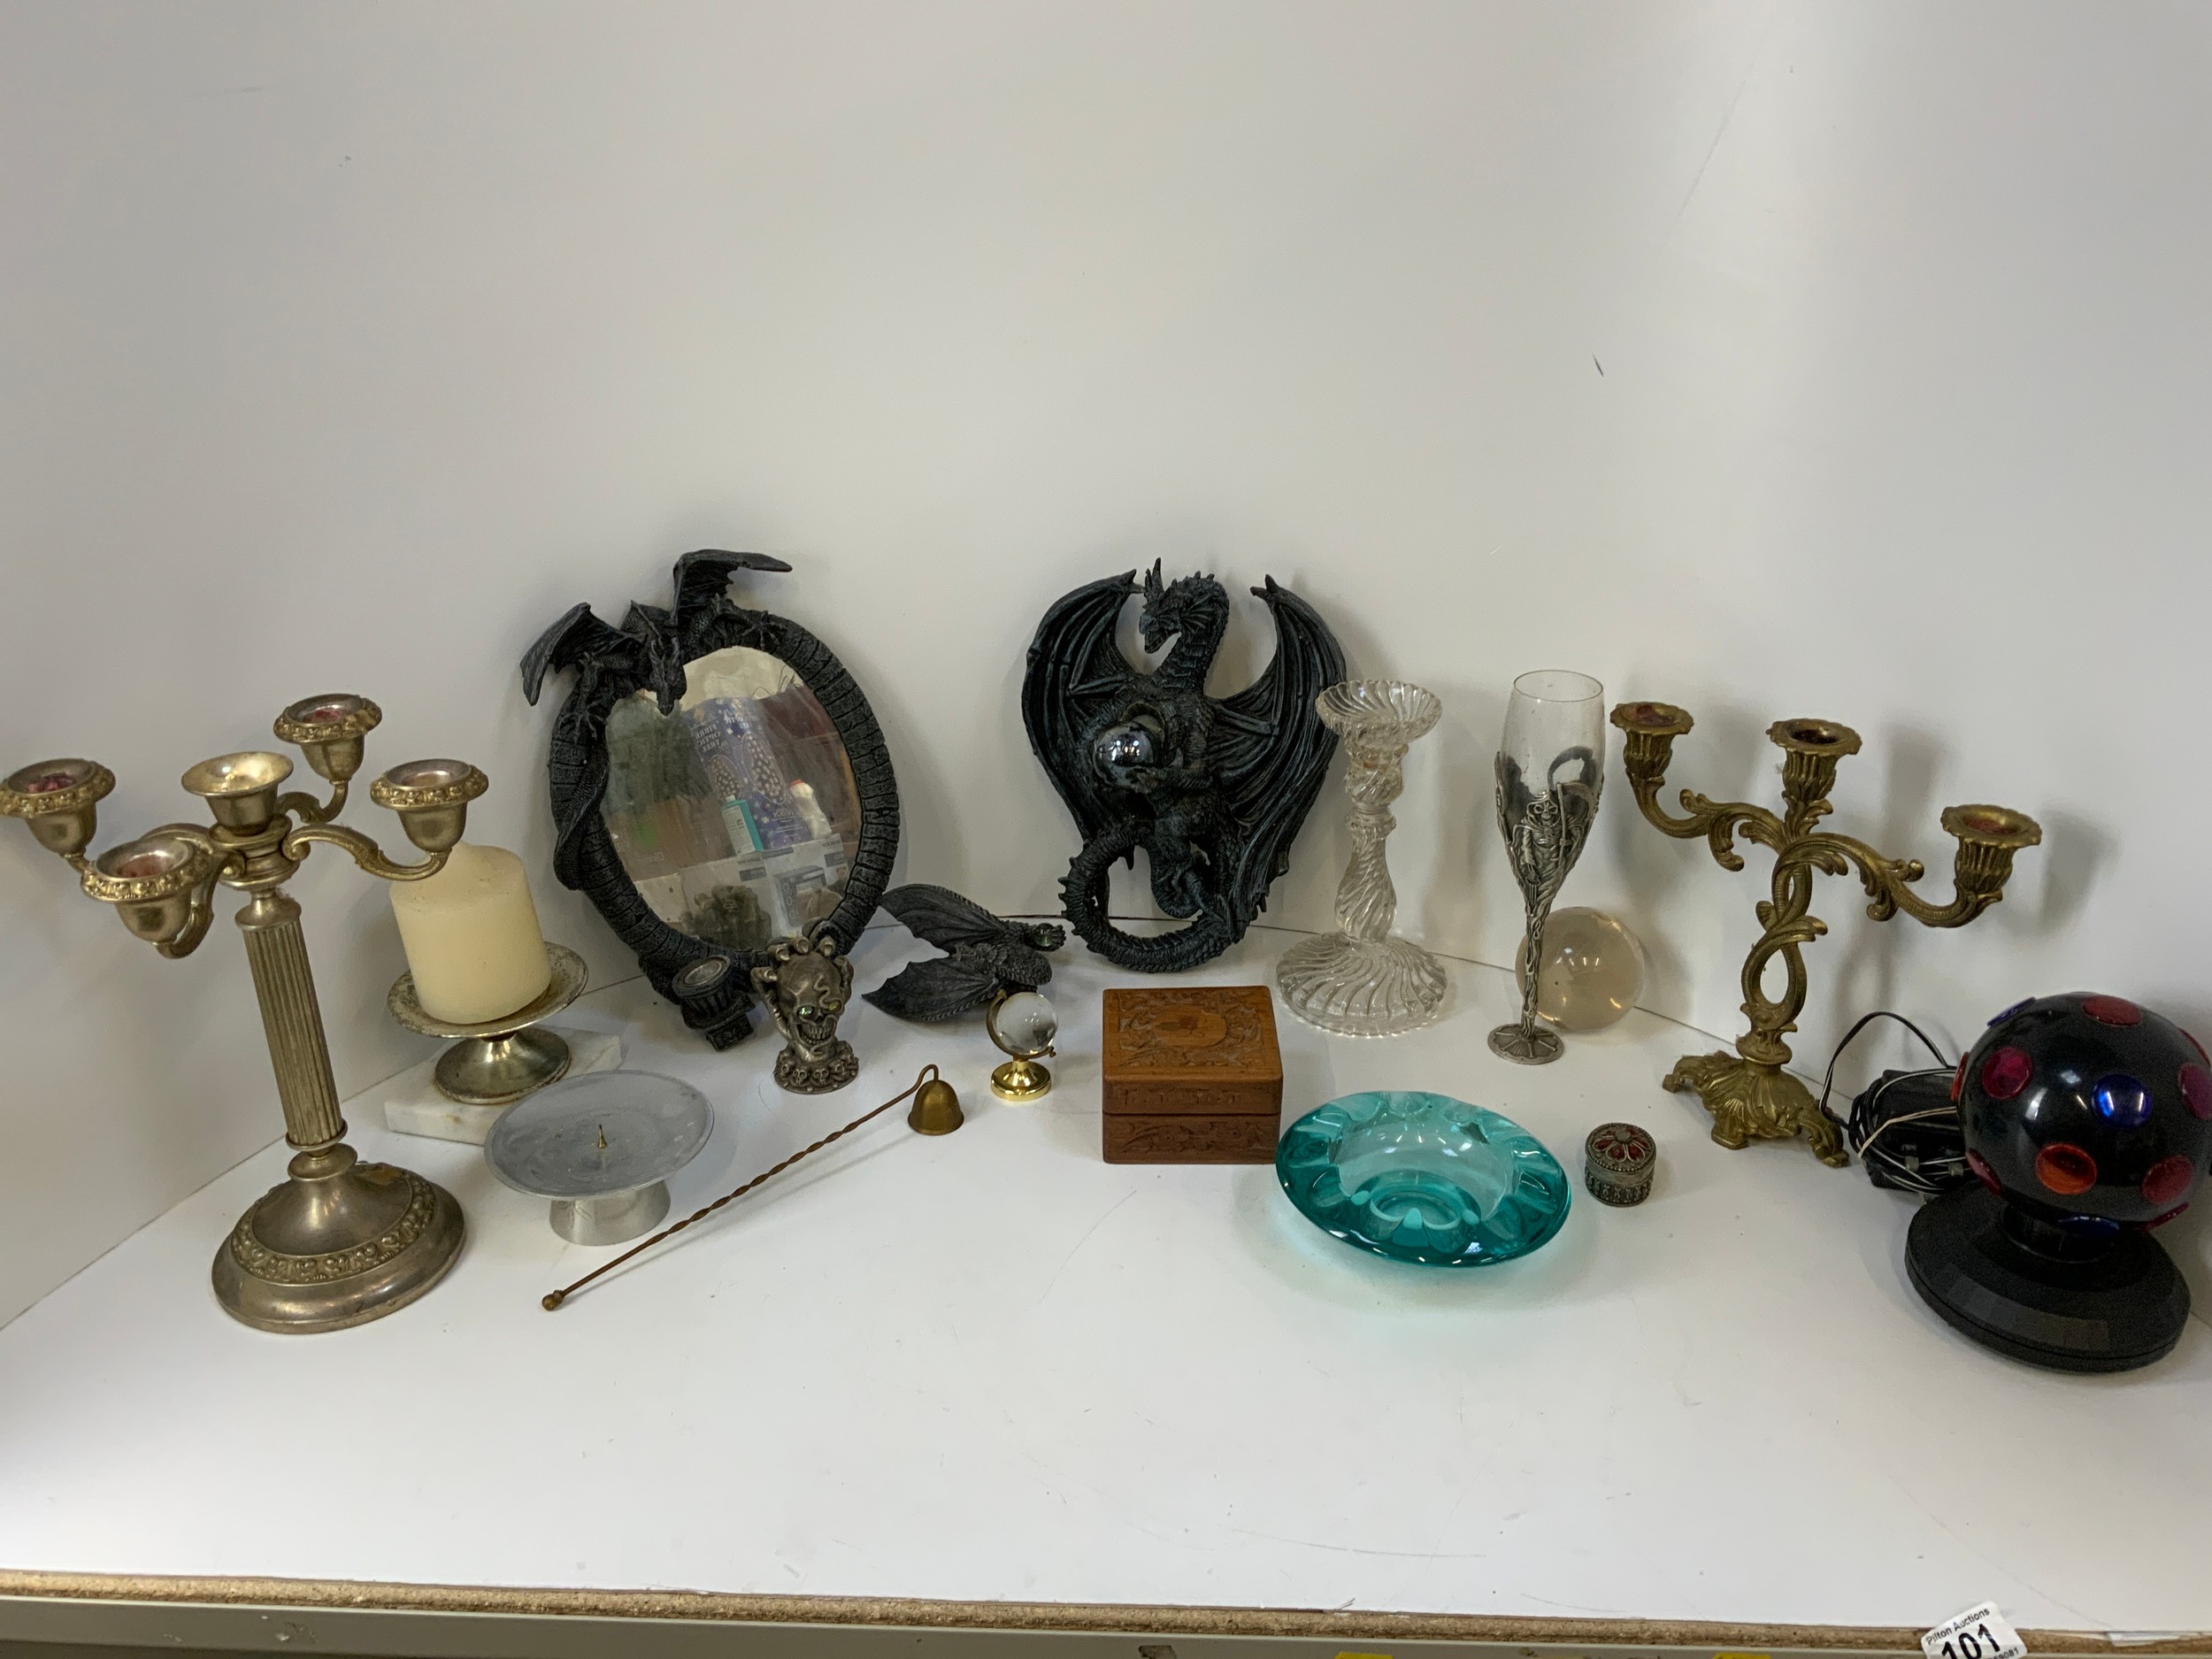 Dragon Mirror, Ornaments etc, Candlesticks, Turquoise Glass Ashtray etc